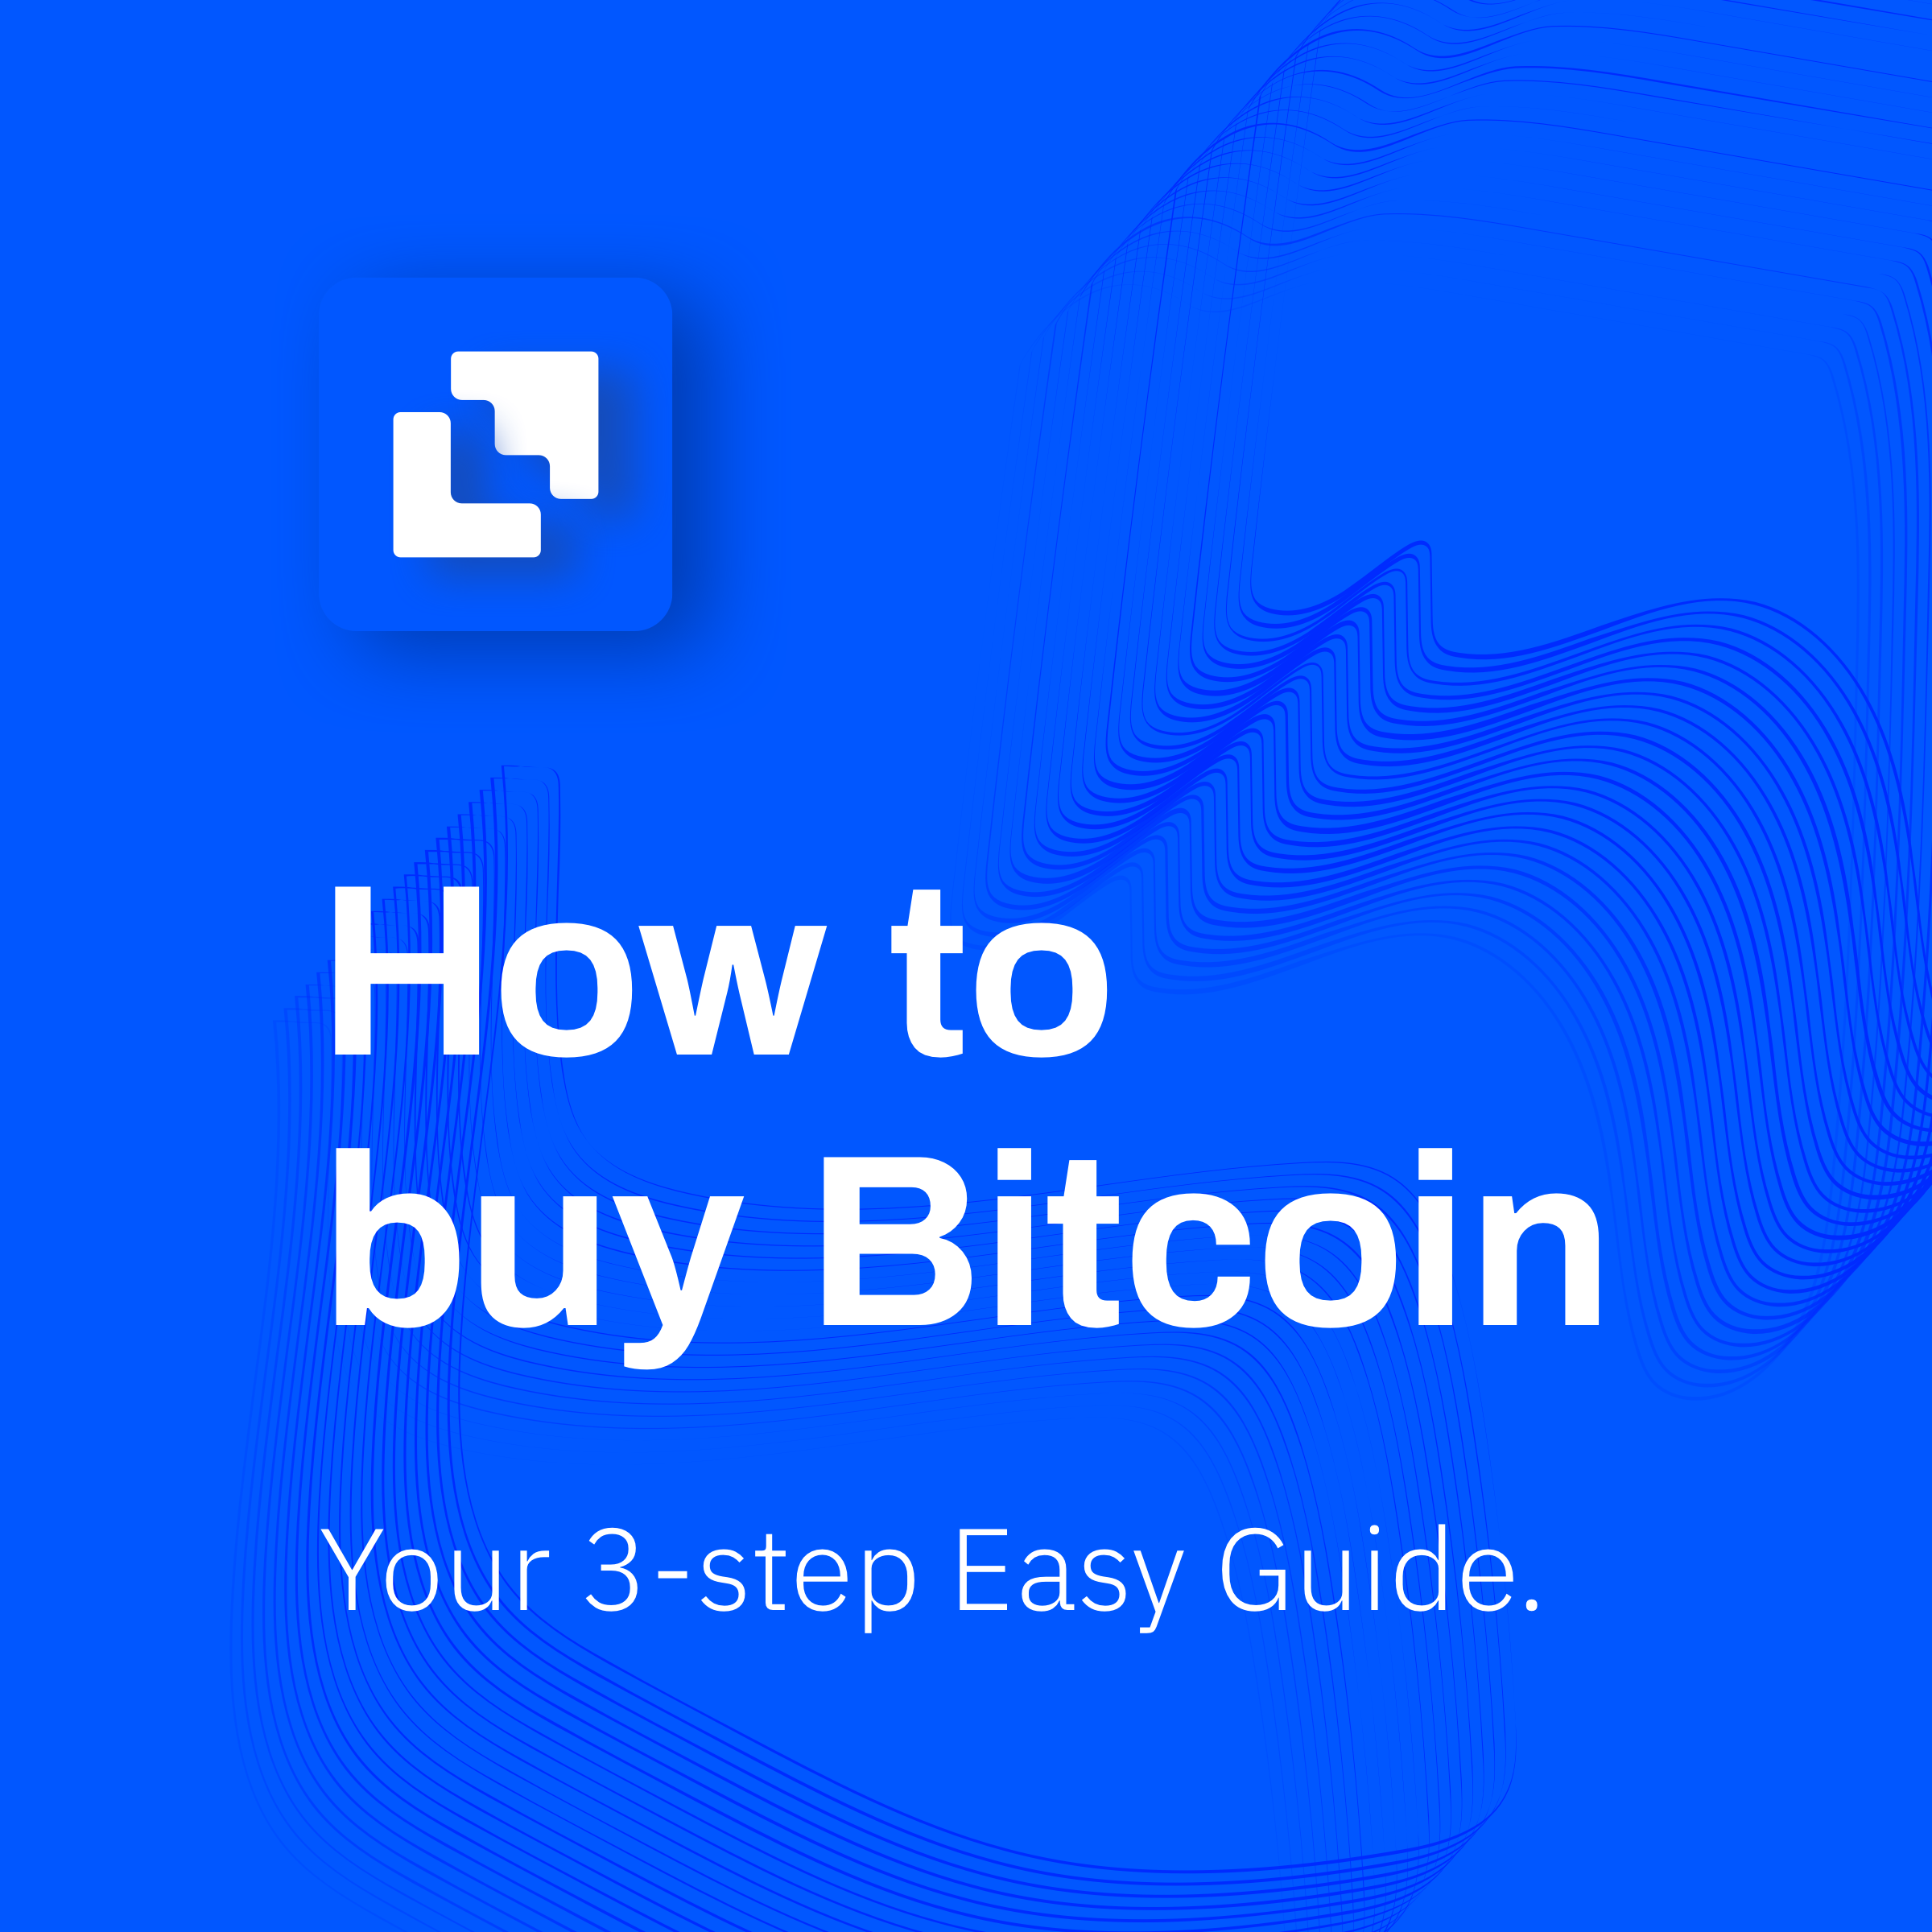 Easy buy bitcoins how to short litecoin